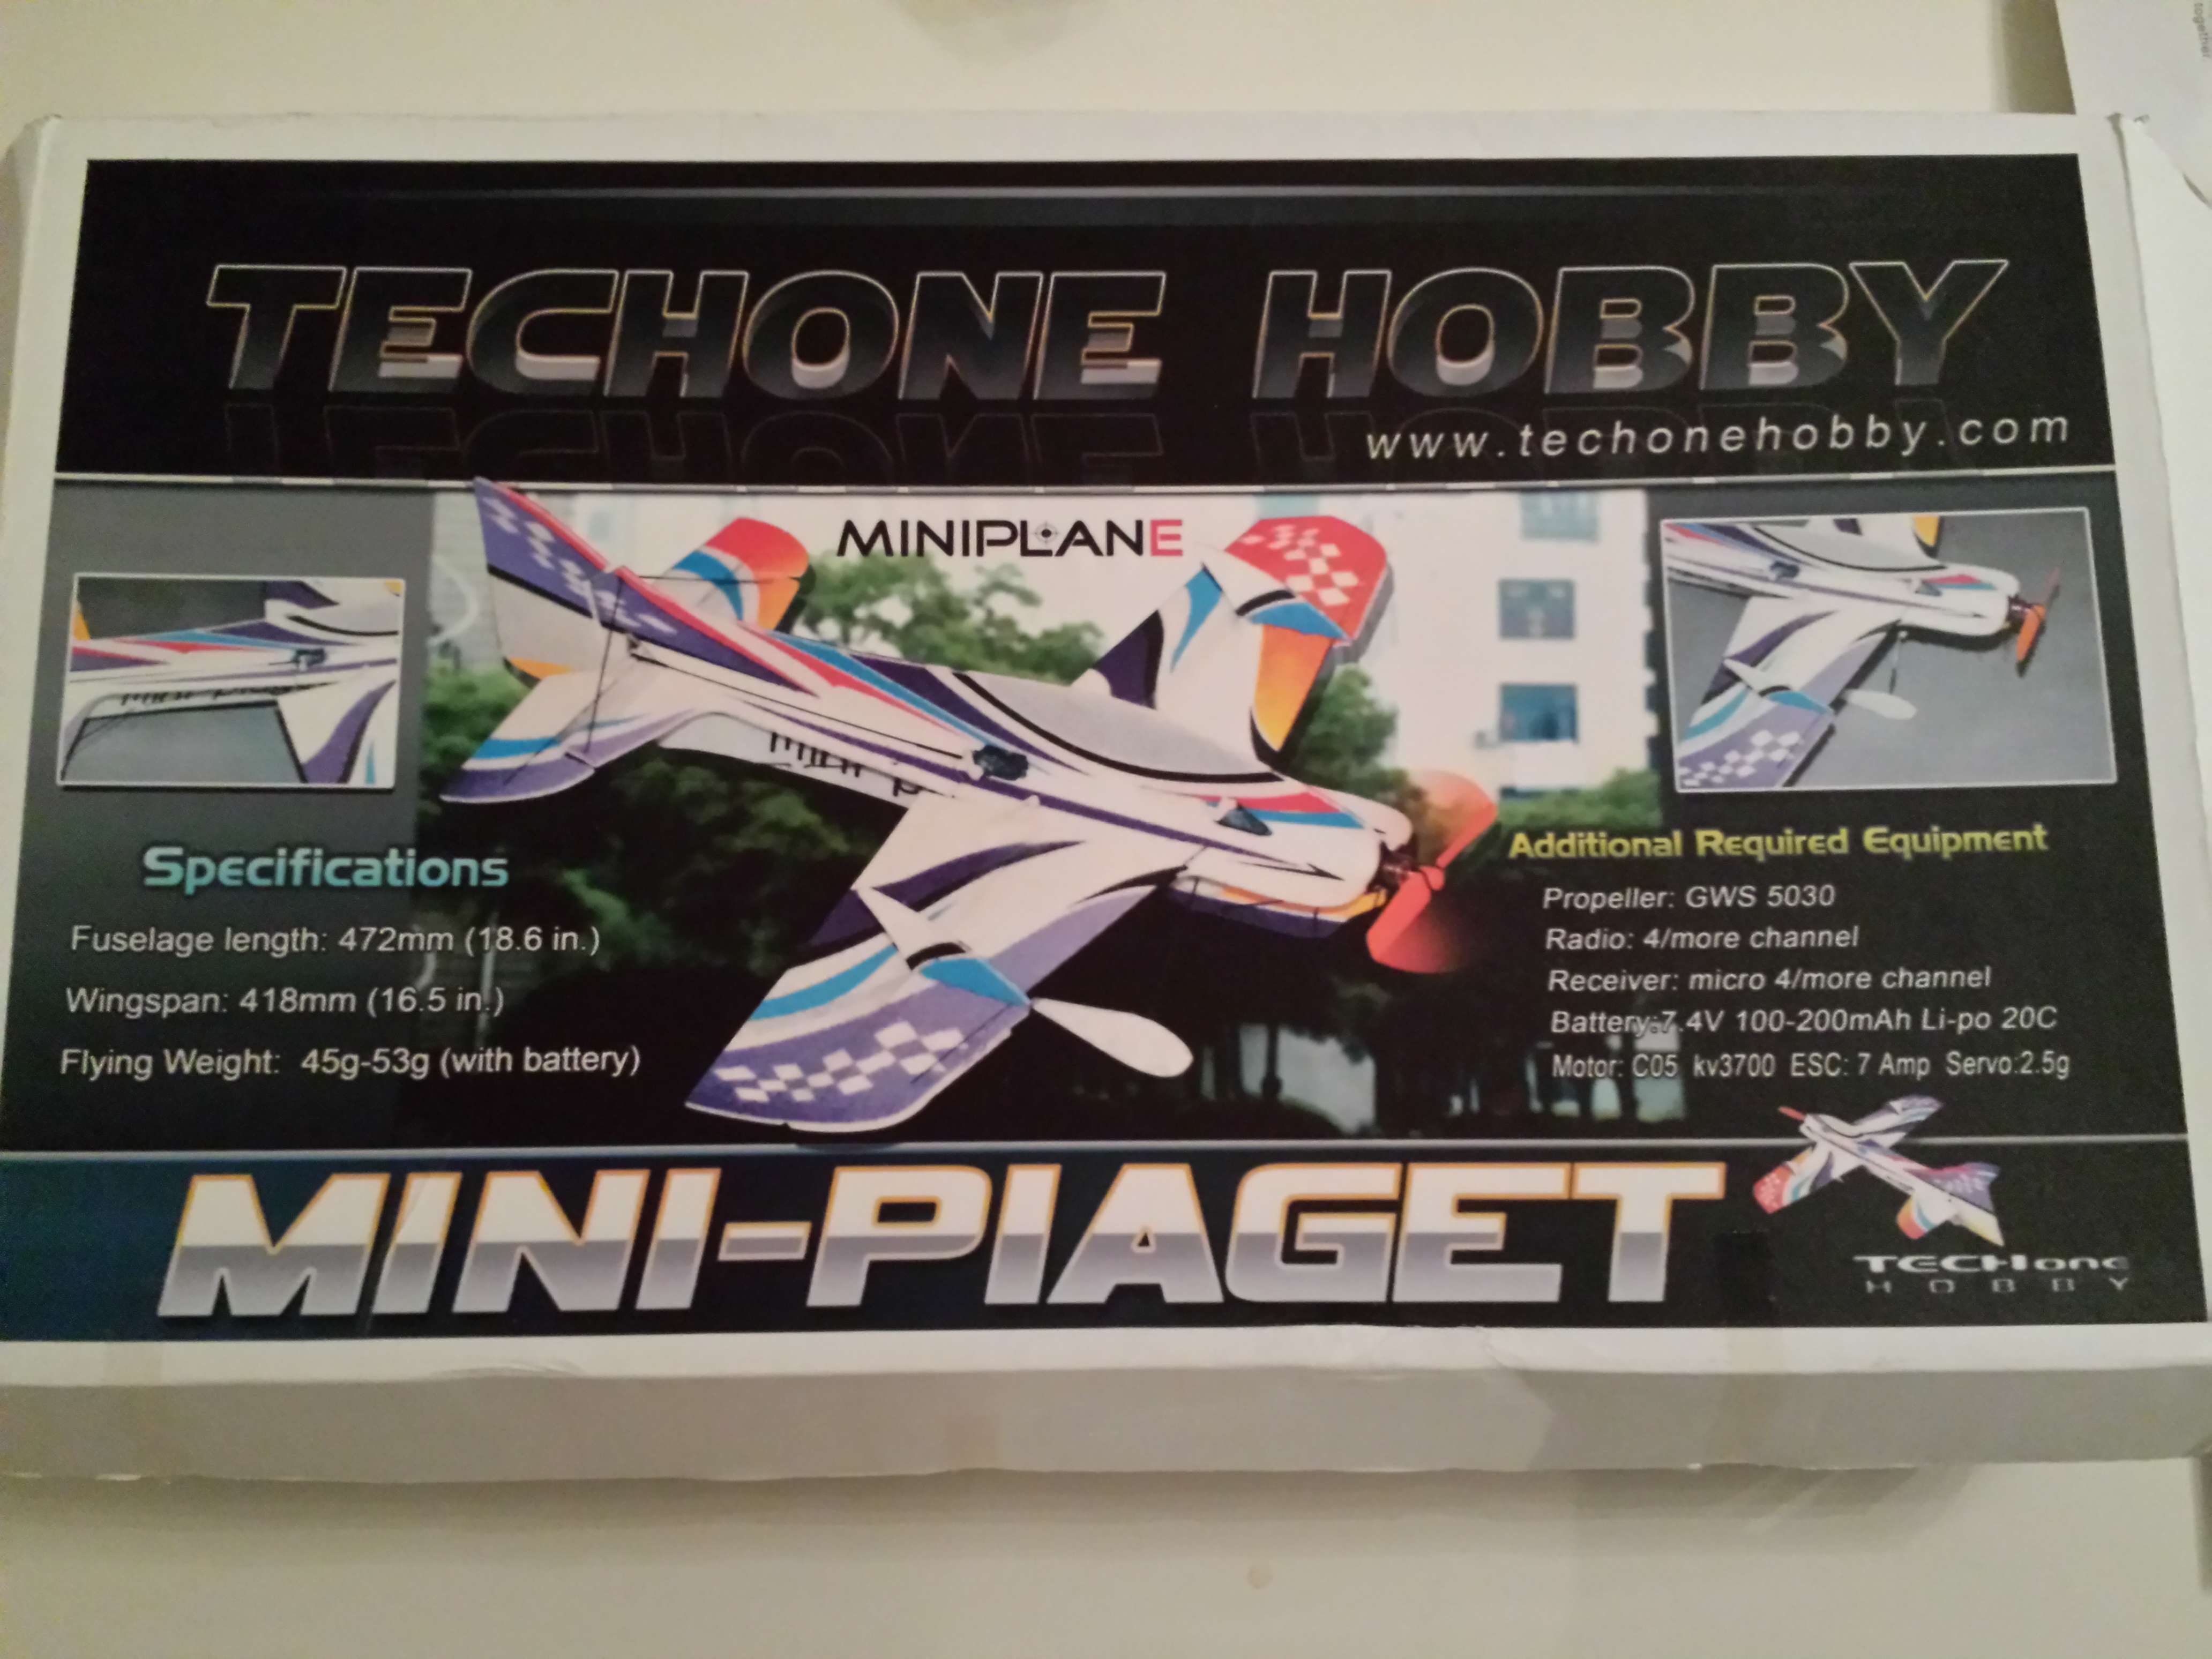 Techone Hobby Mini Piaget Kit